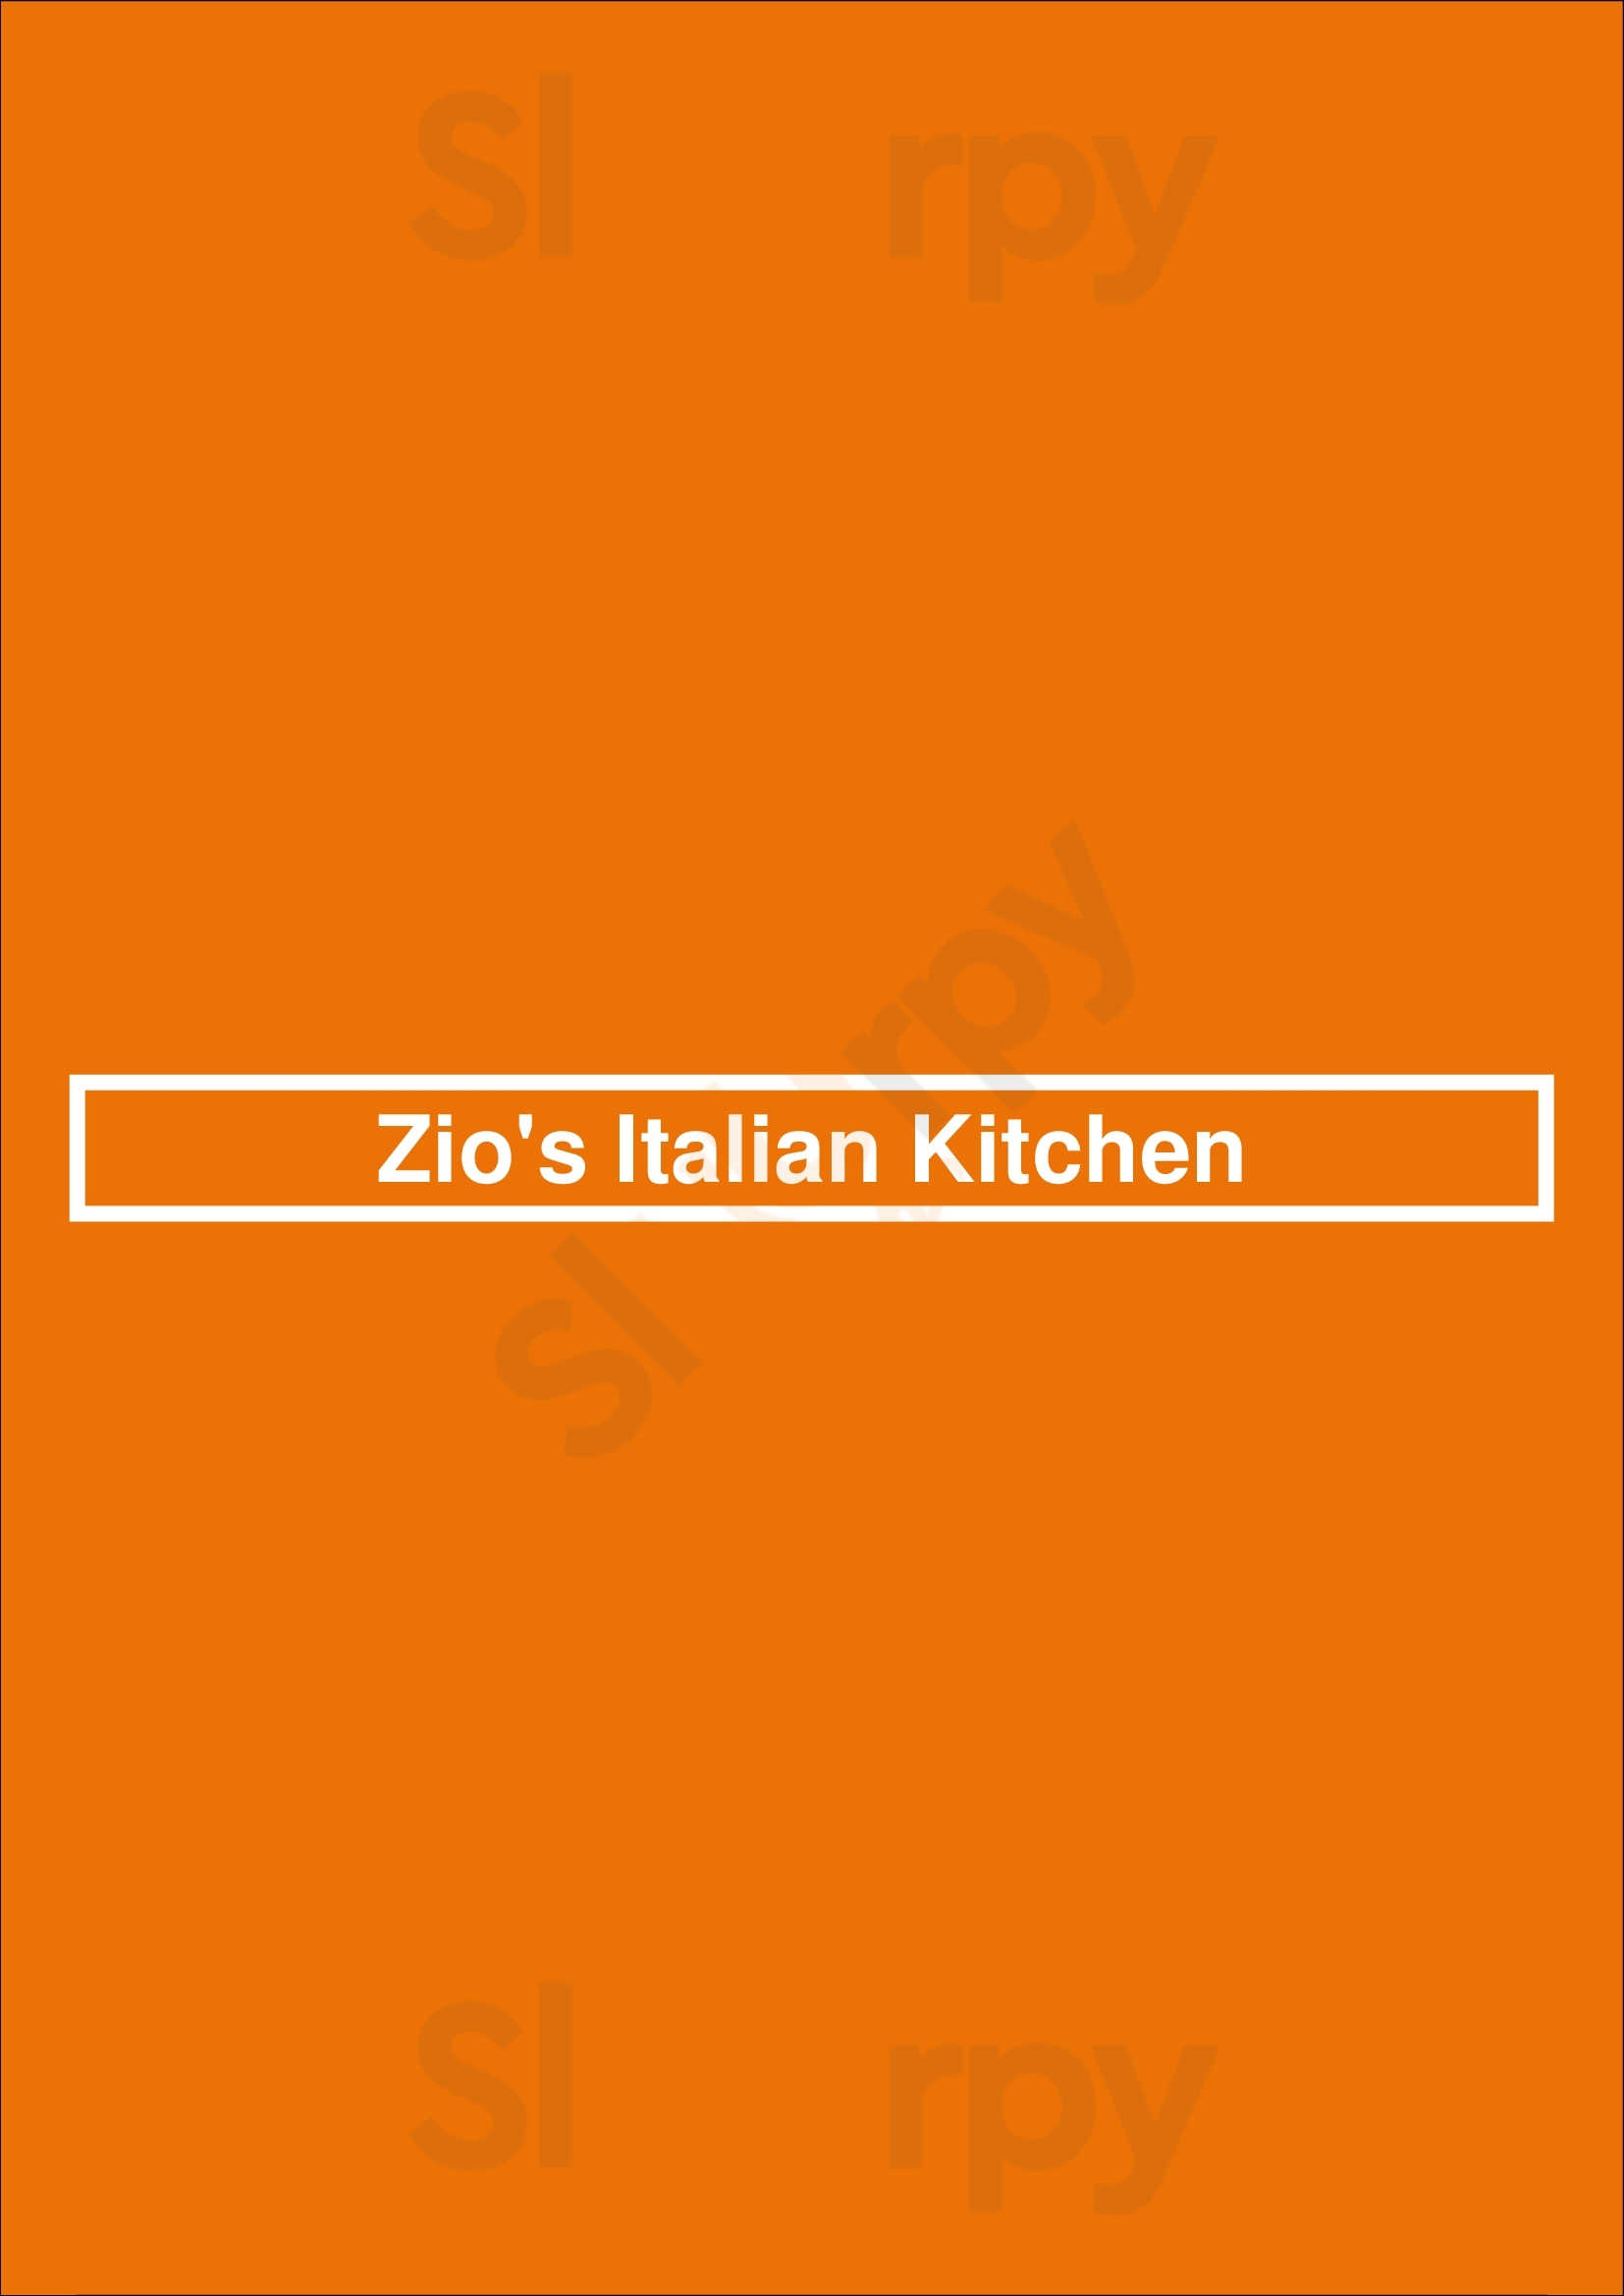 Zio's Italian Kitchen Tulsa Menu - 1